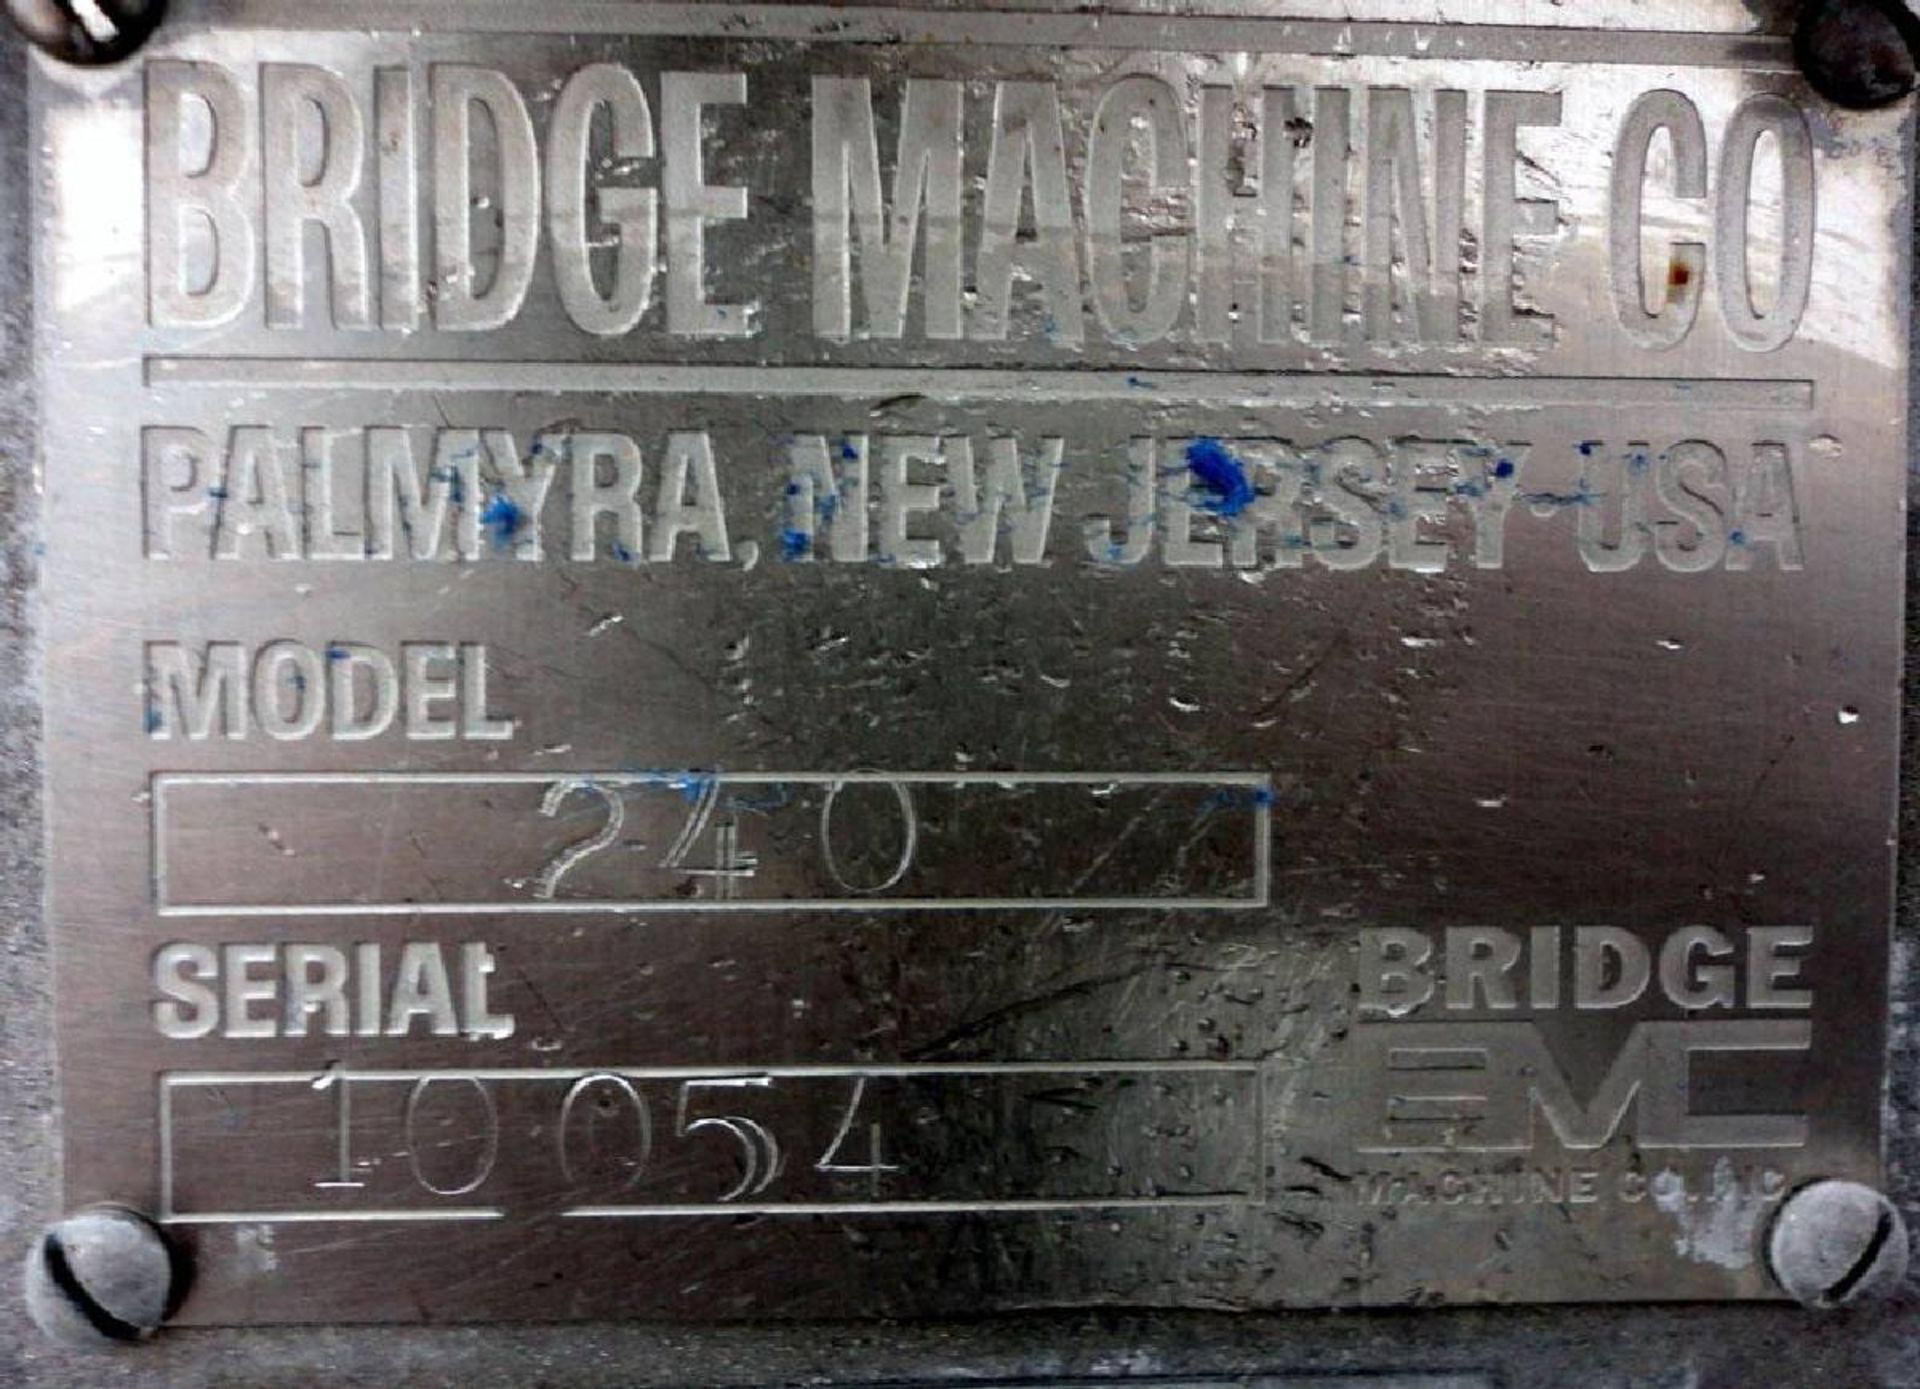 Bridge Machine Model 240 Patty Former - Image 14 of 16